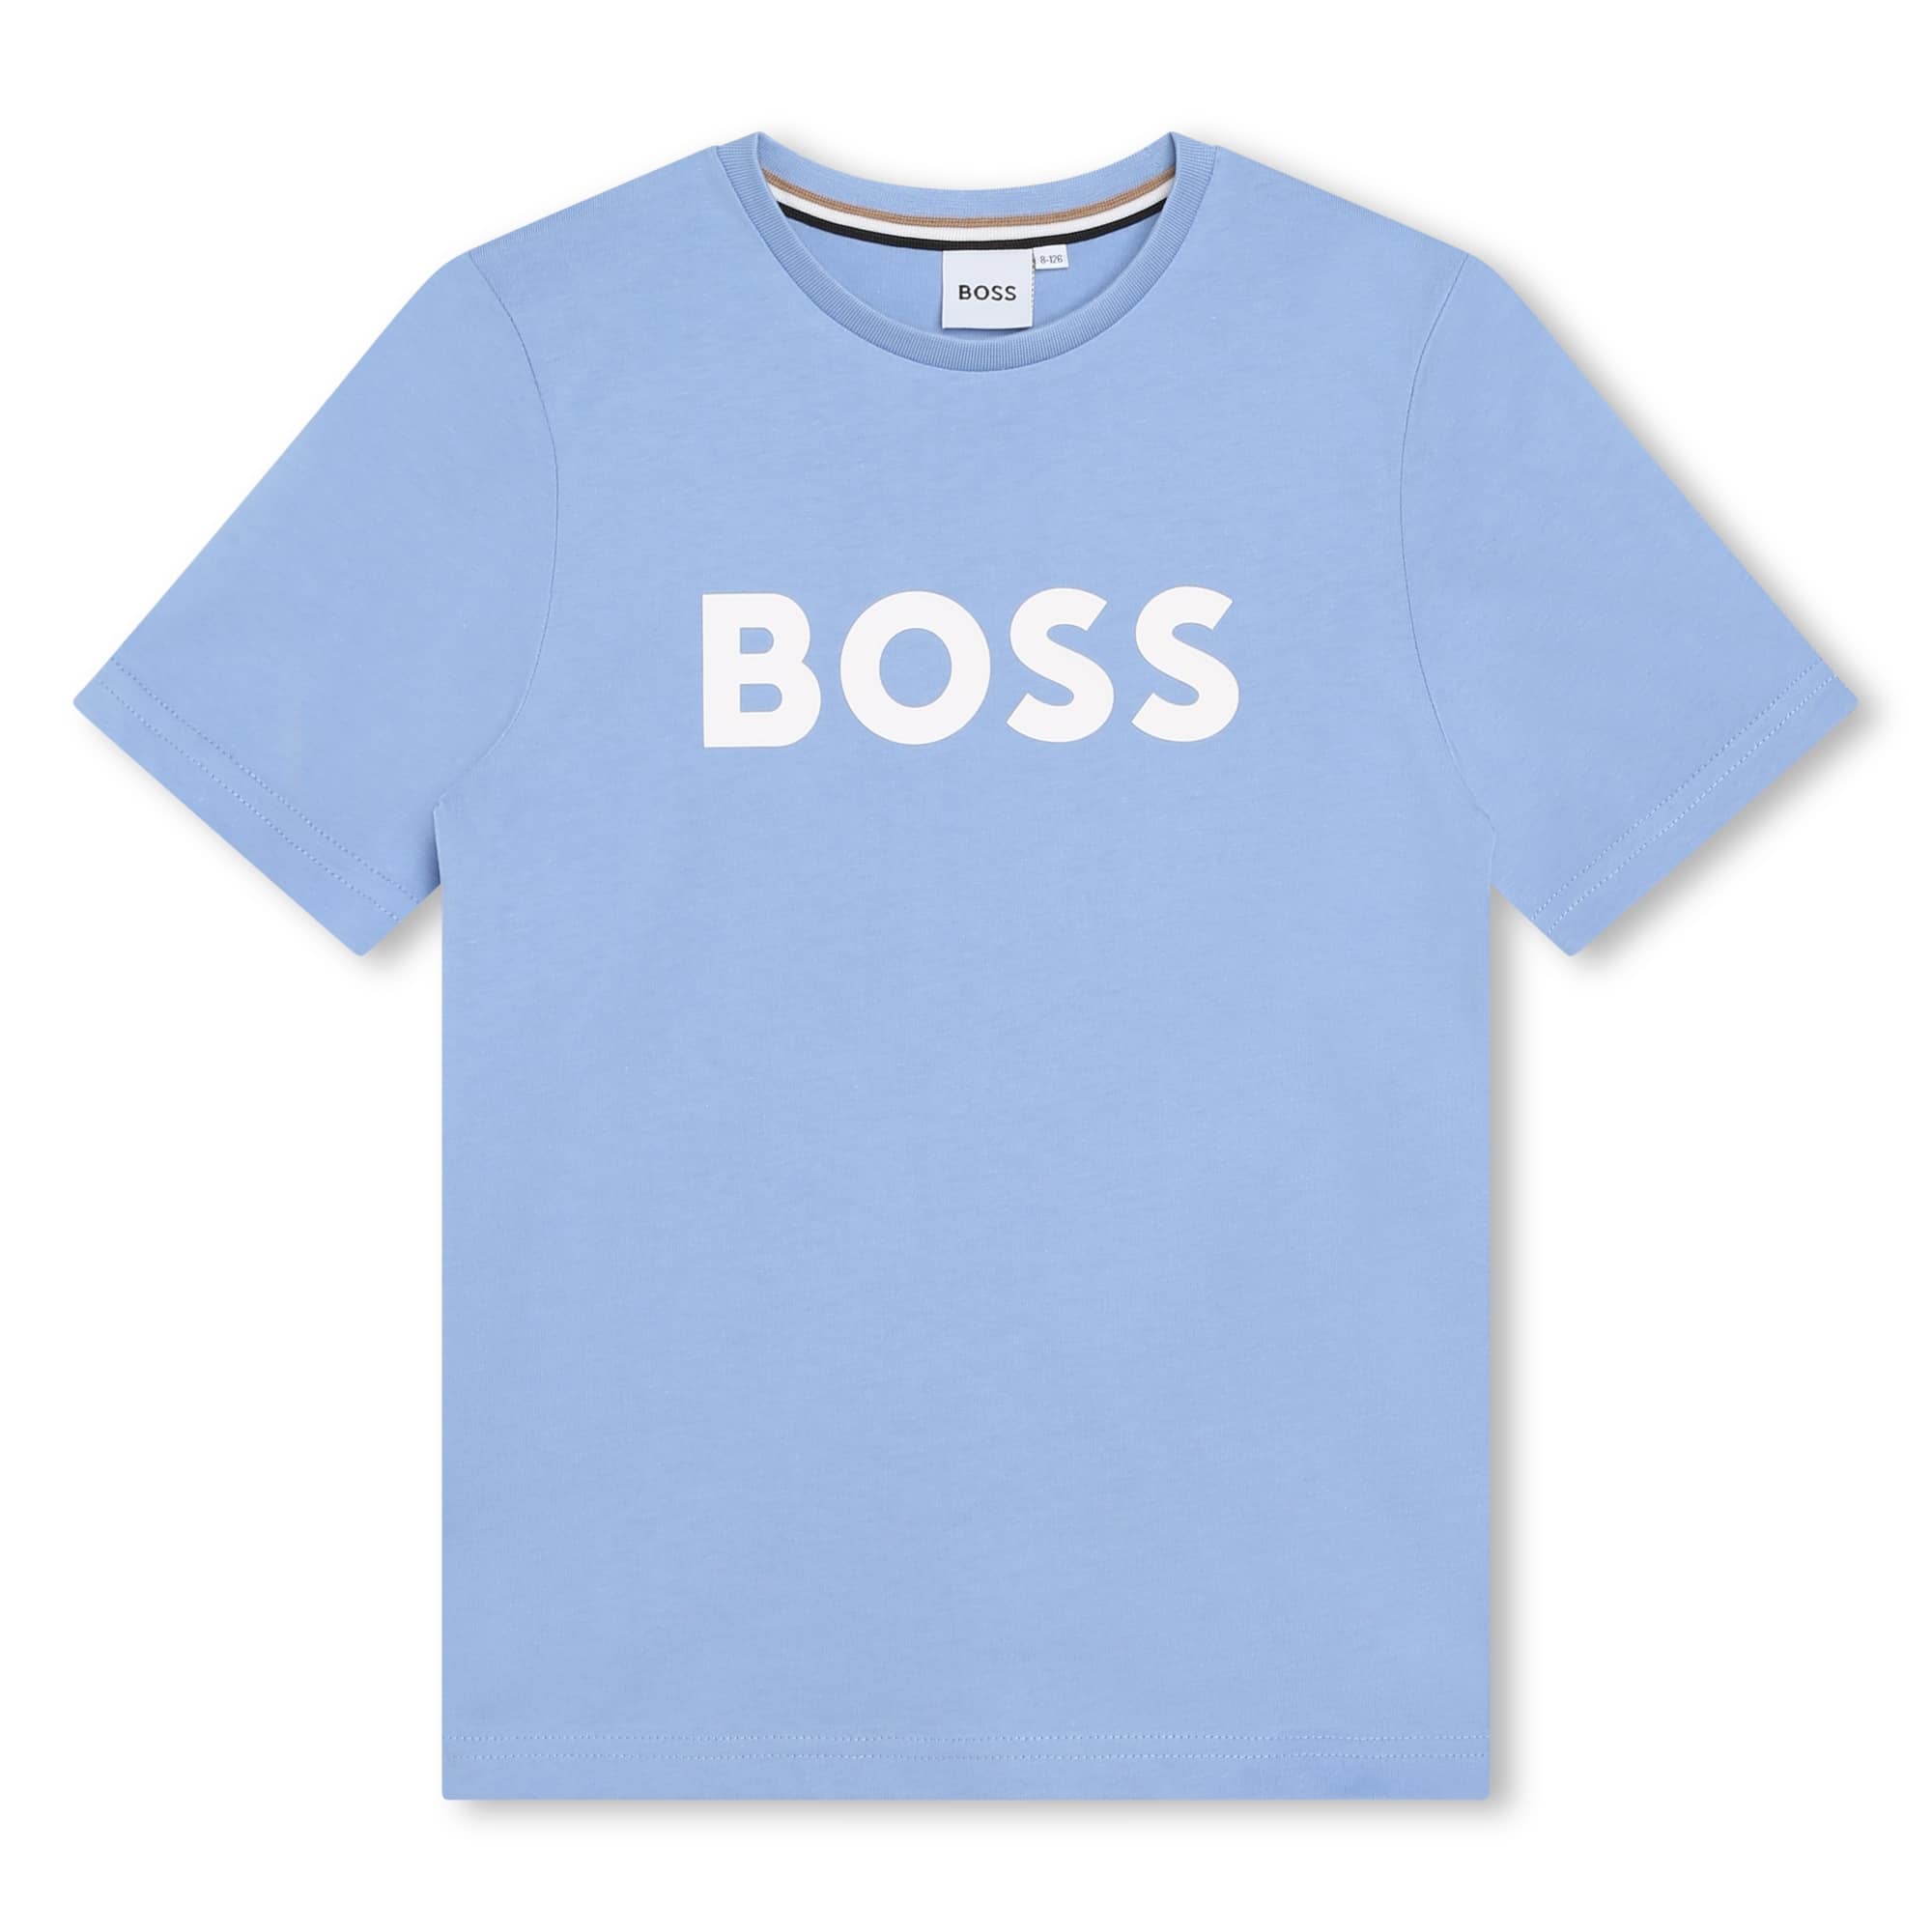 Boss boys tshirt in pale blue